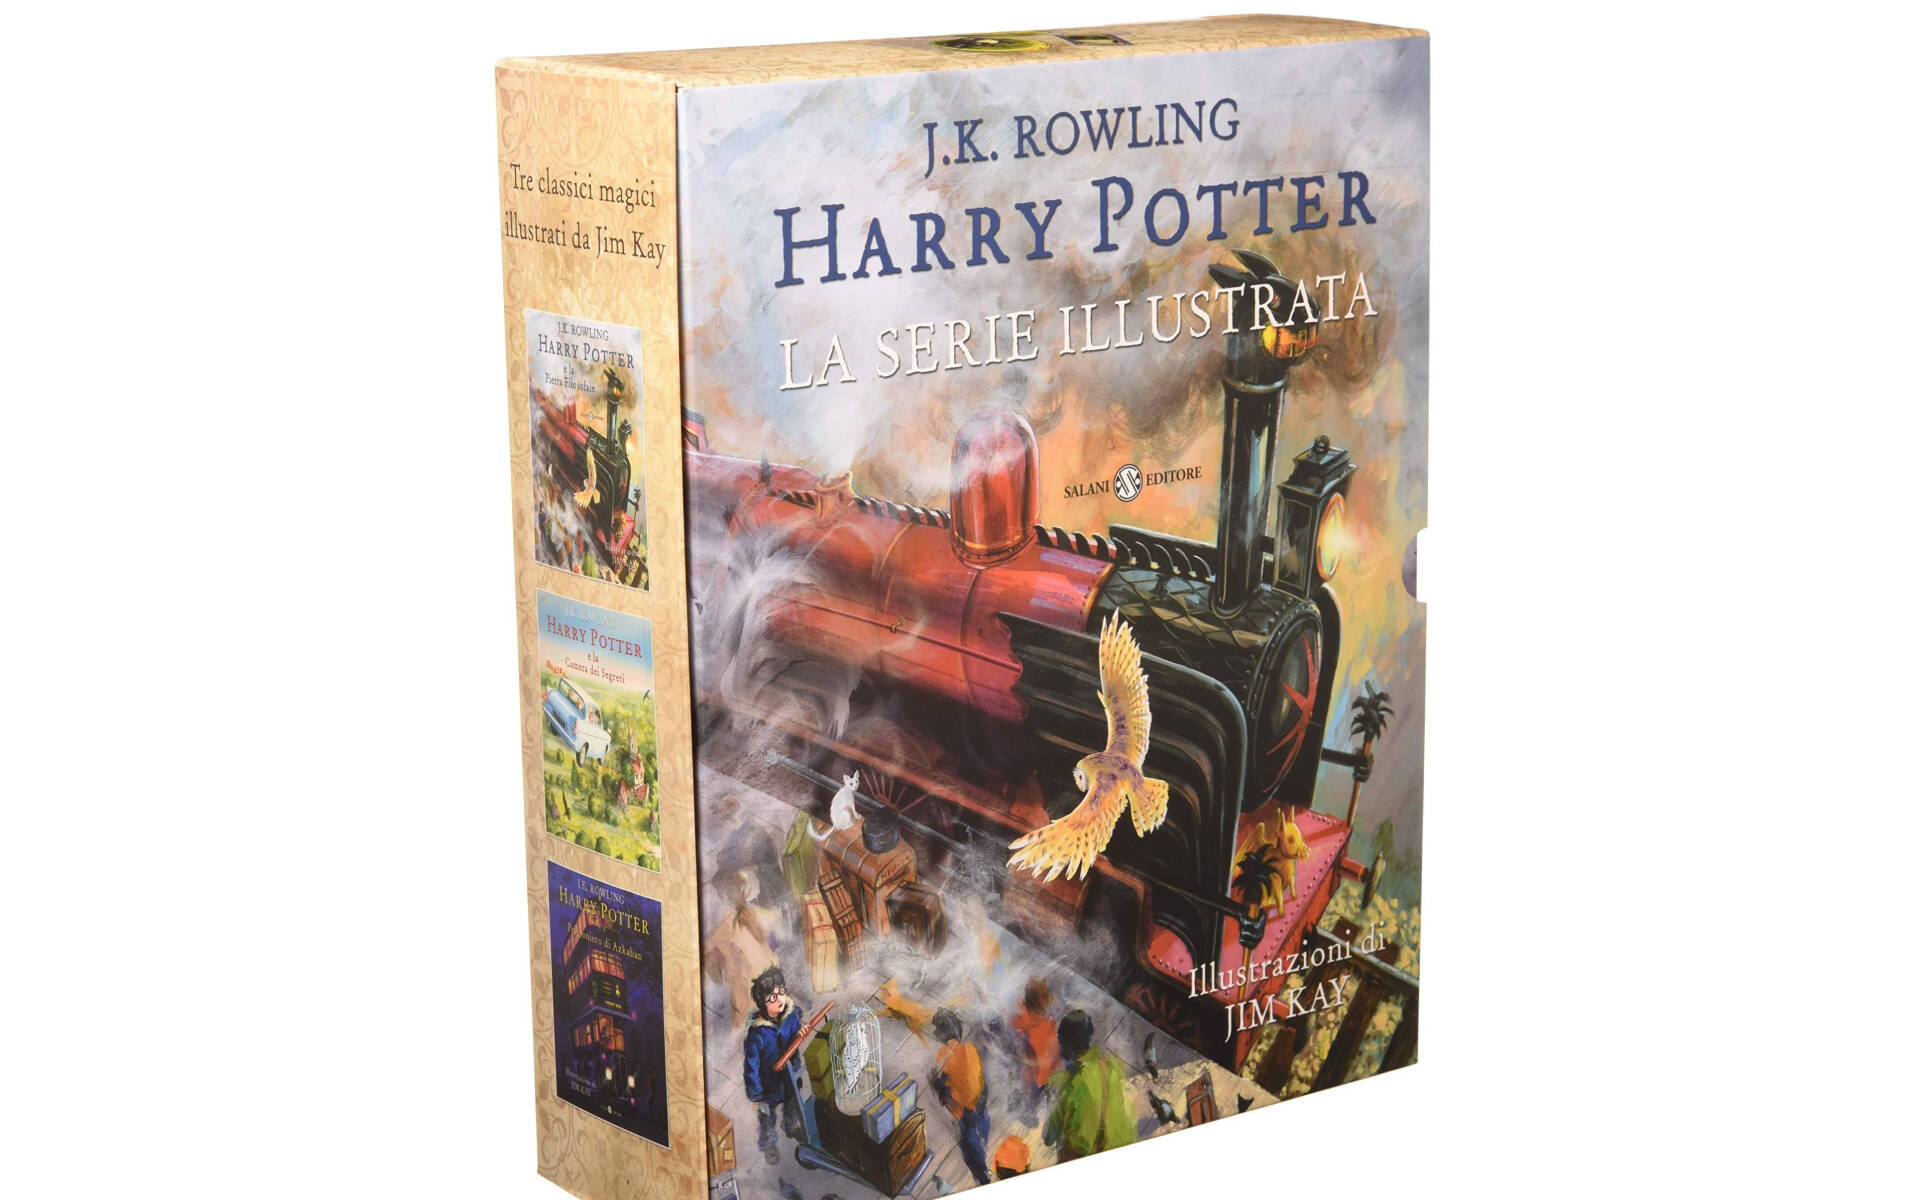 Harry Potter, le edizioni illustrate da Jim Kay in sconto! - Tom's Hardware